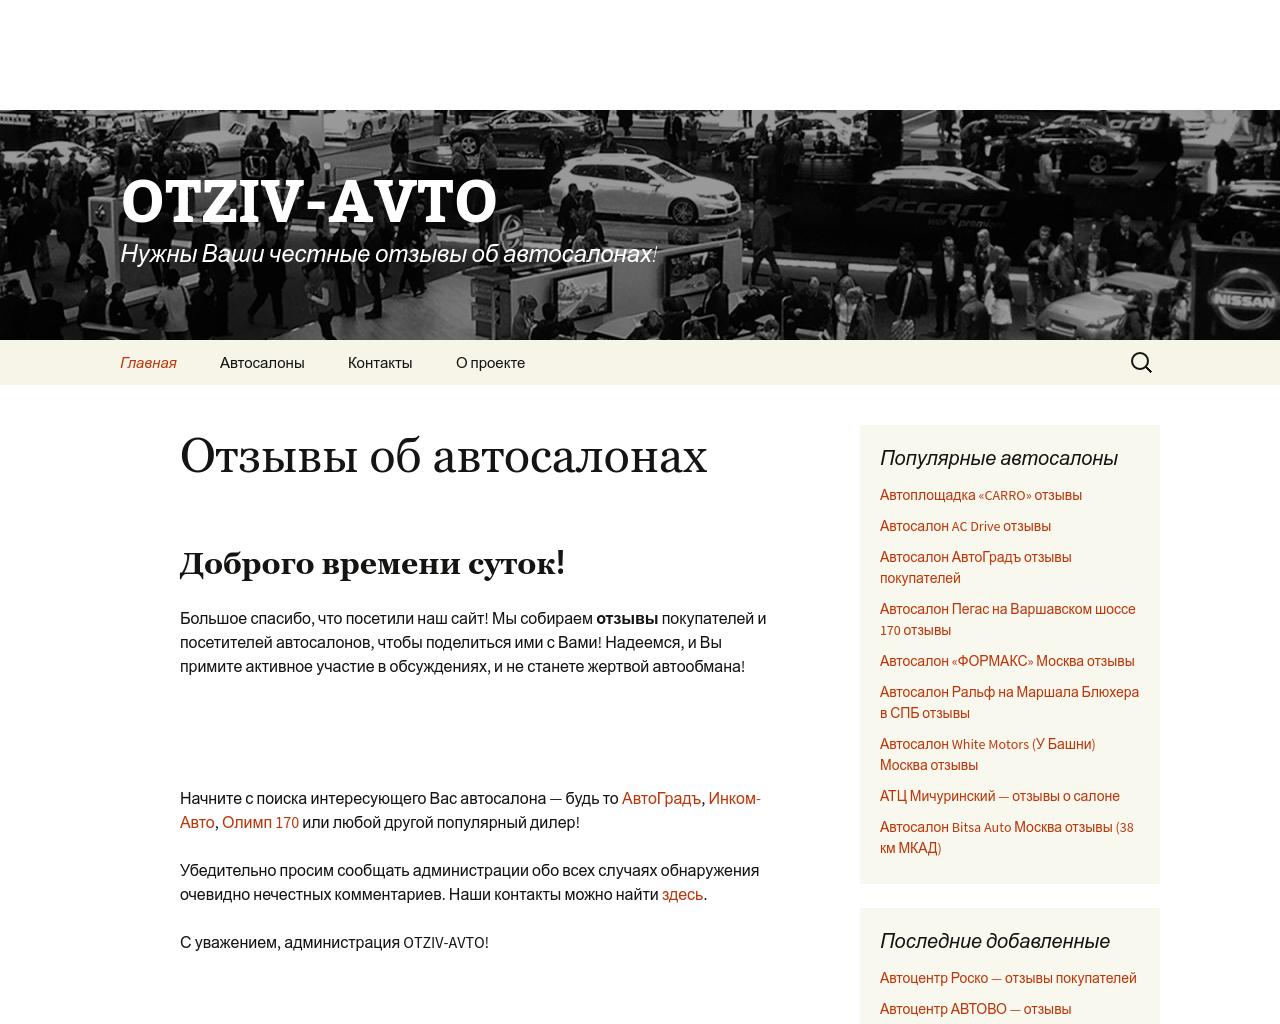 Изображение сайта otziv-avto.ru в разрешении 1280x1024